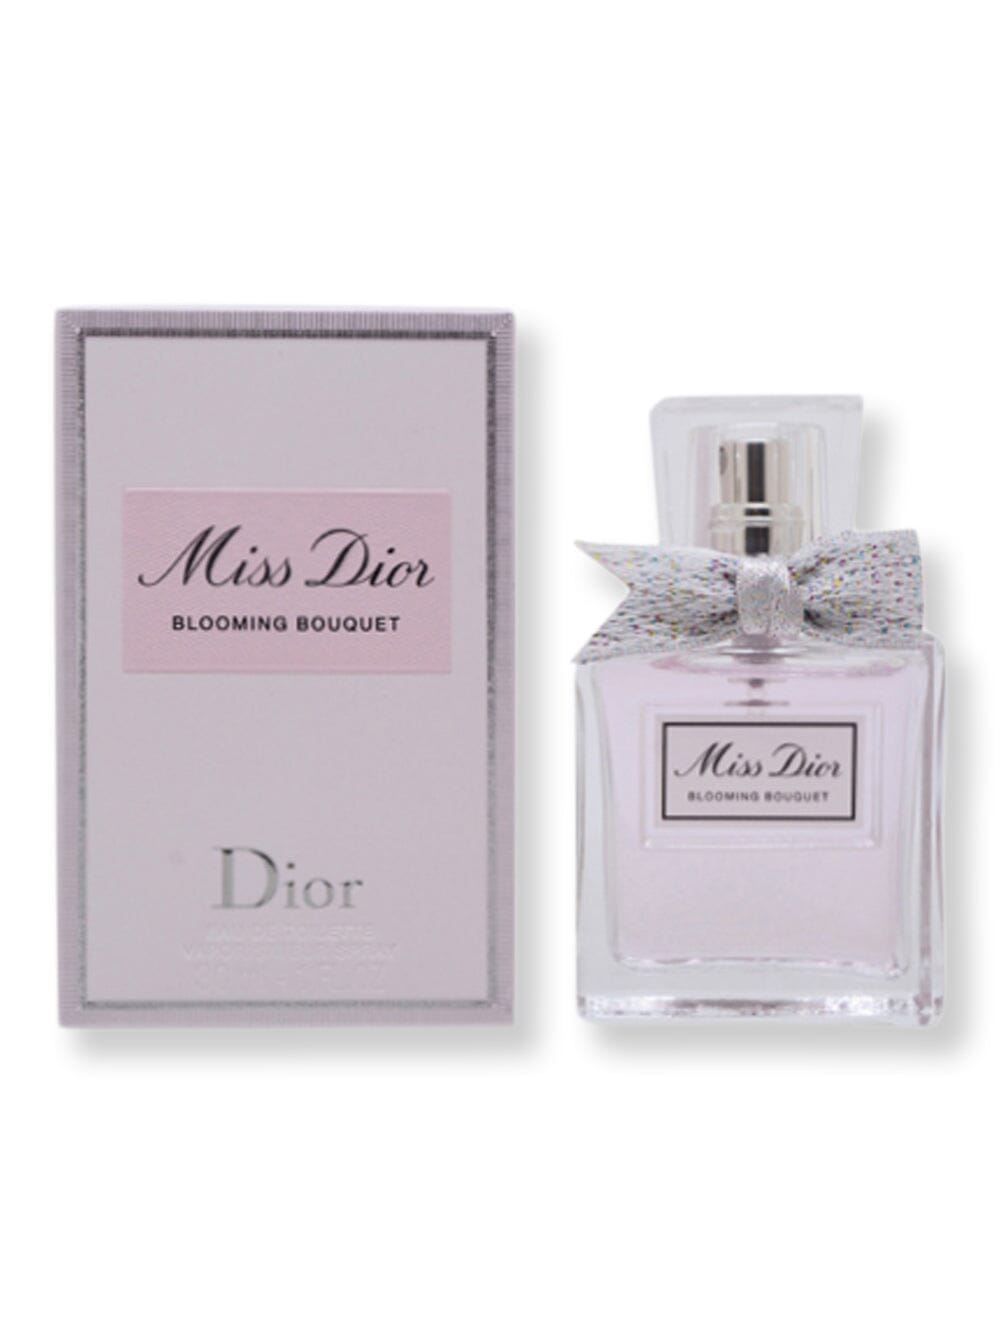 Dior Dior Miss Dior Blooming Bouquet EDT Spray 1 oz30 ml Perfume 